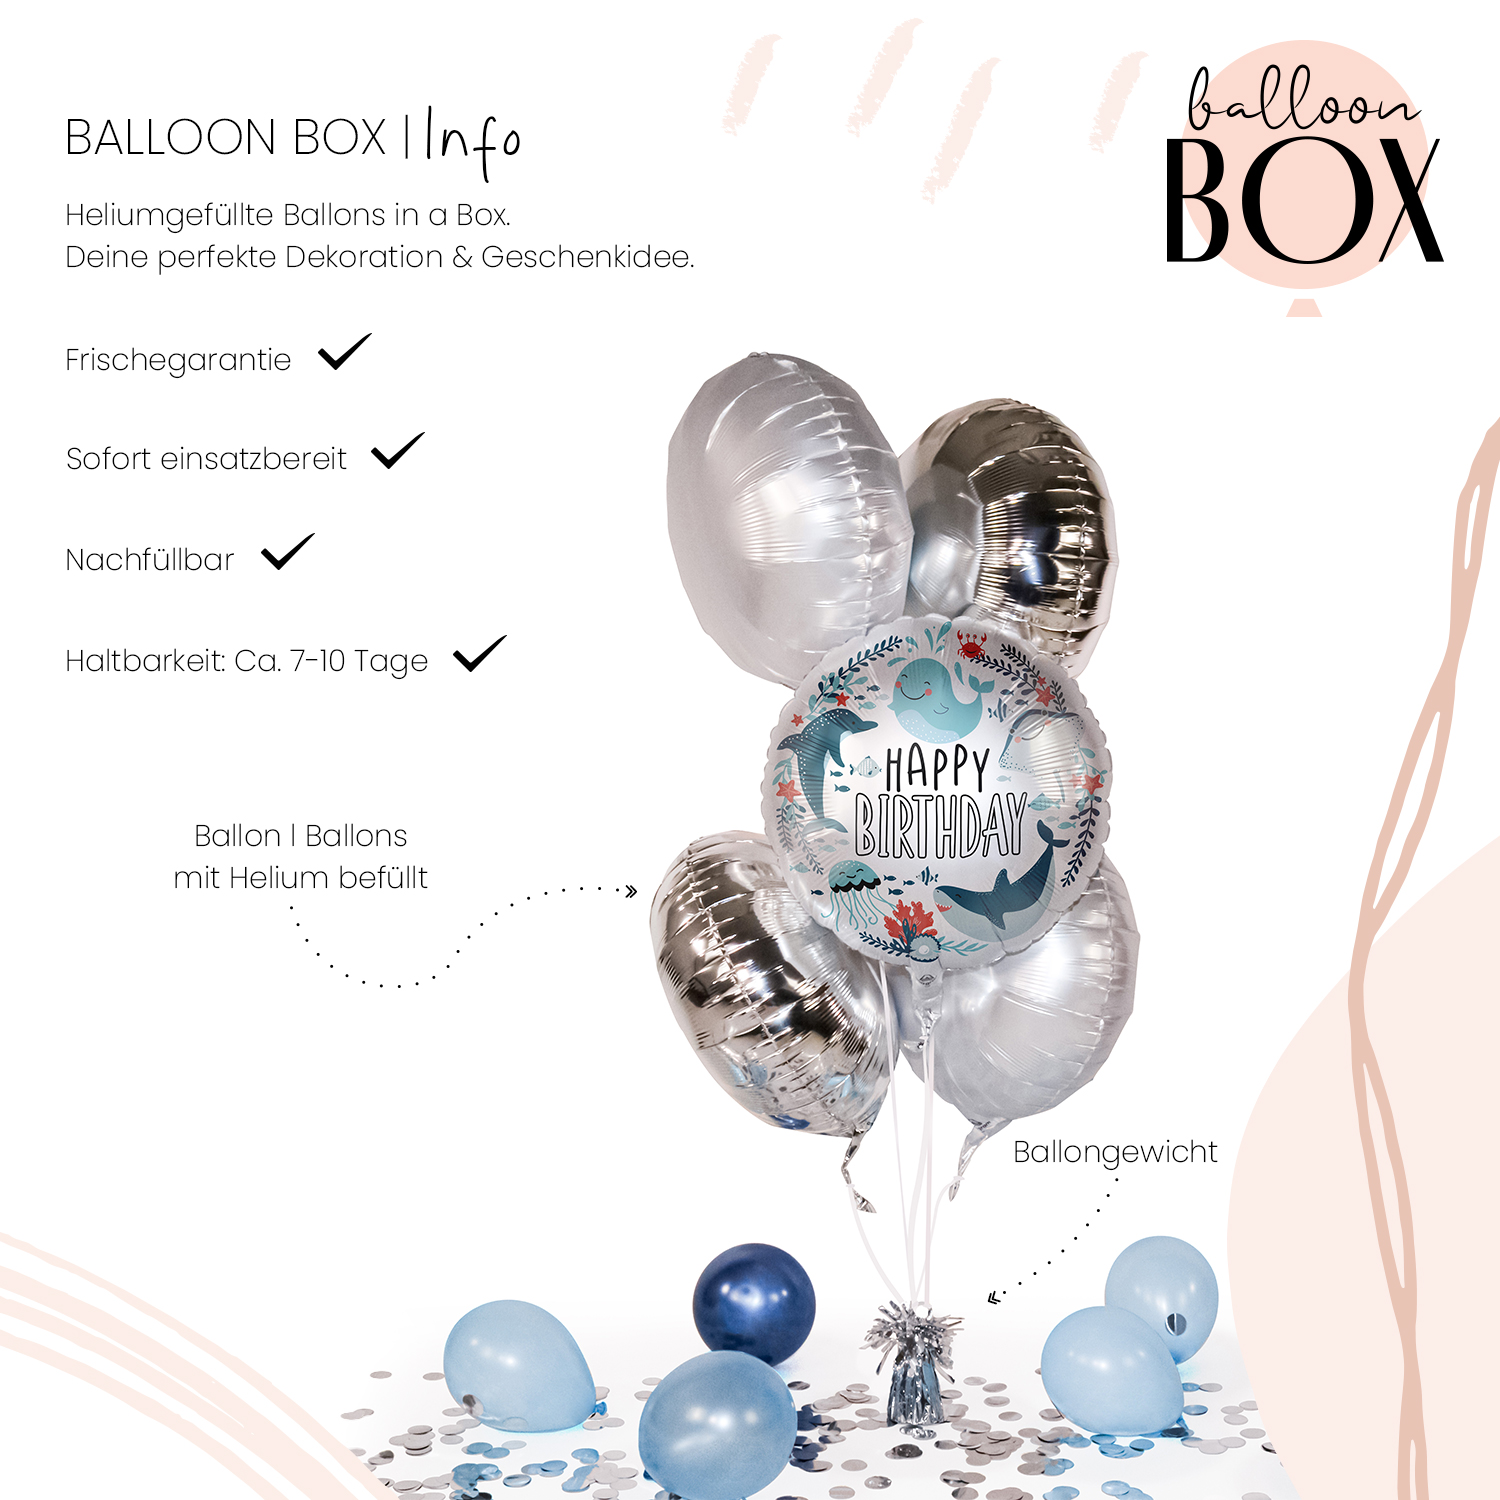 Heliumballon in a Box - Under The Sea Birthday